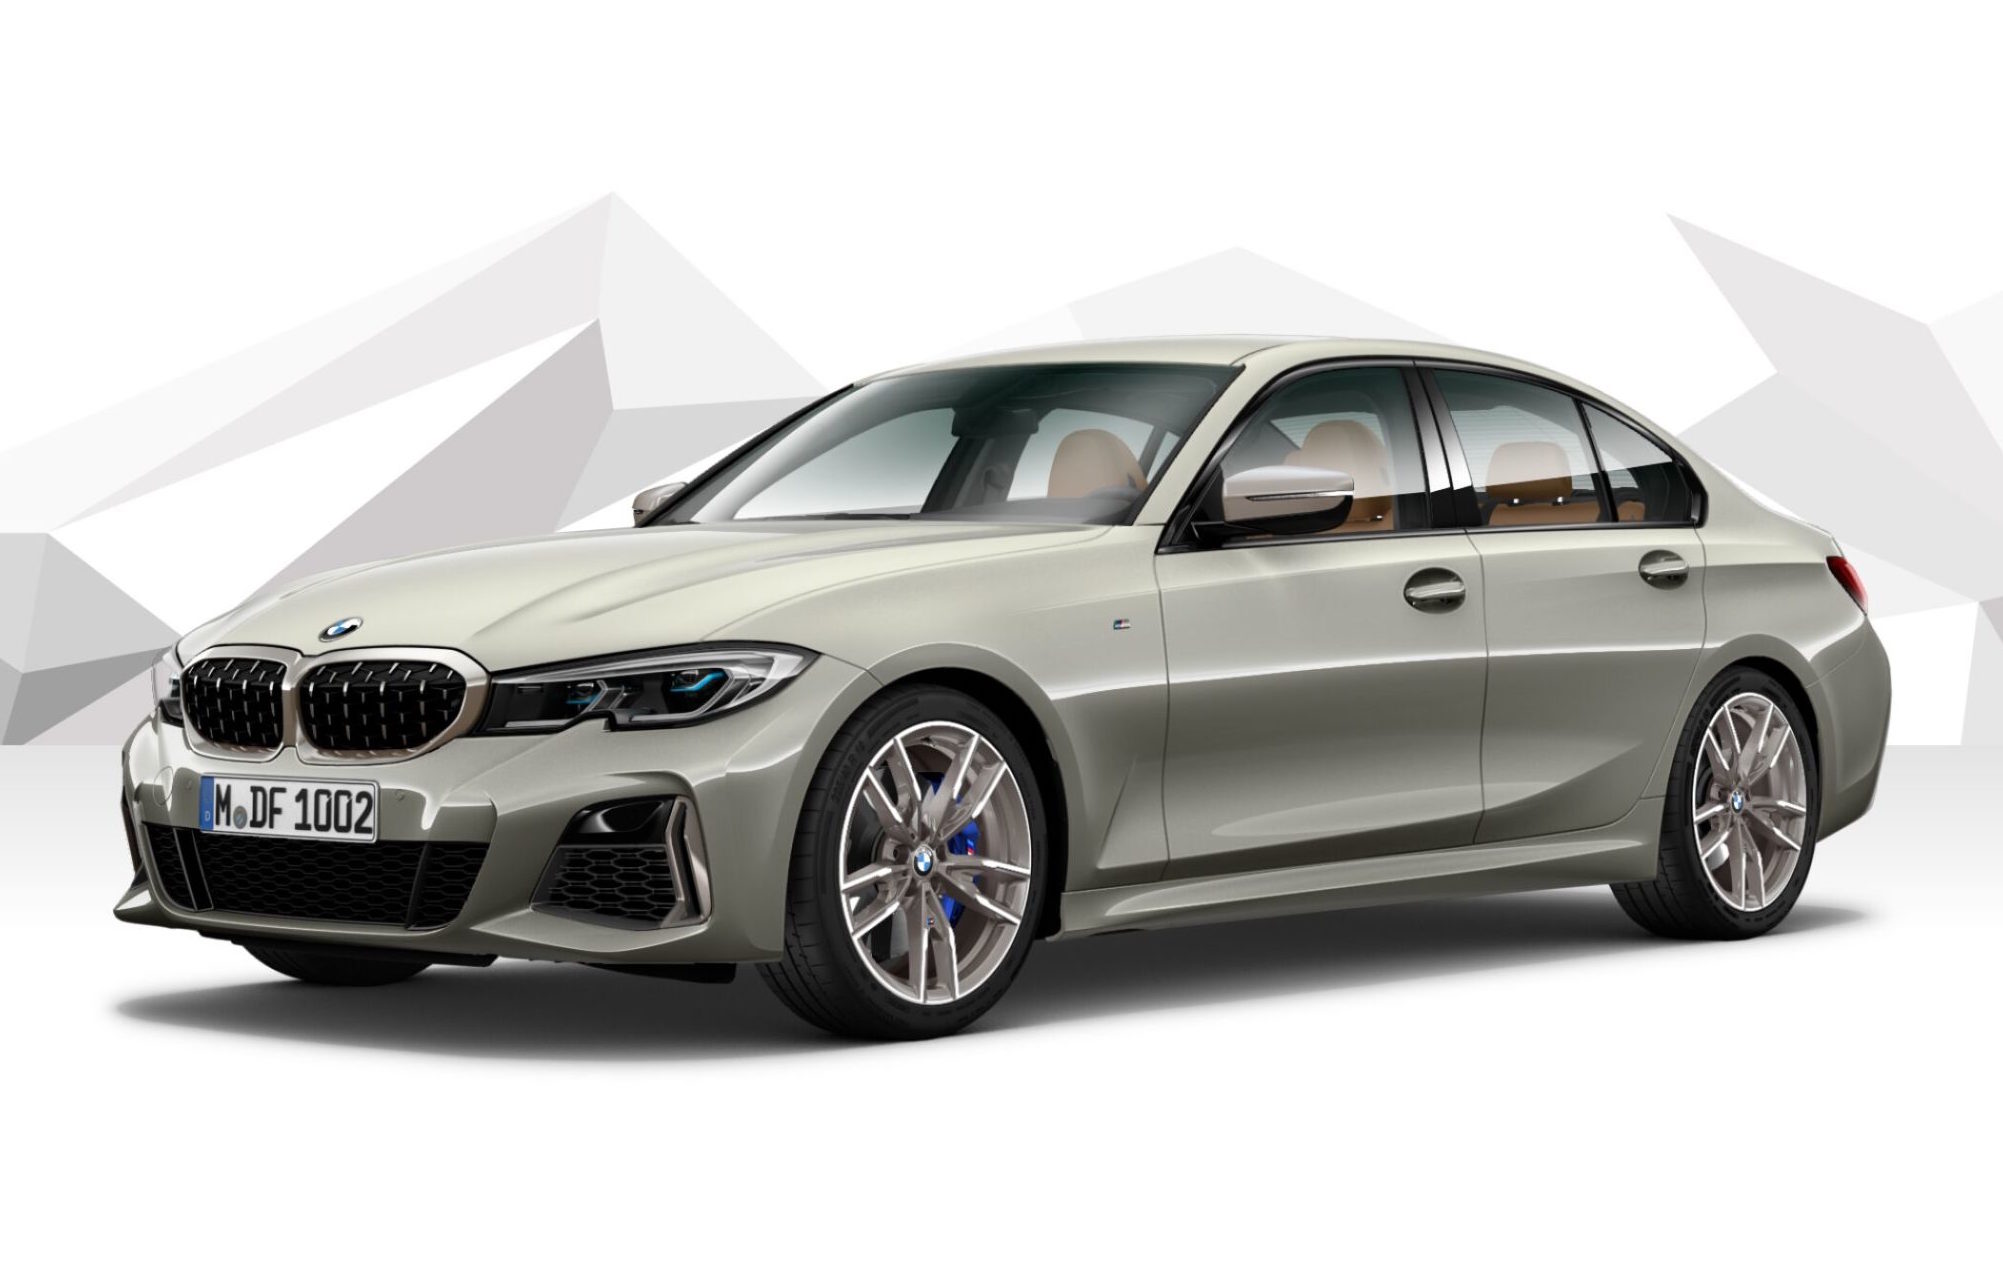 2020 BMW M340d, new 330e plug-in hybrids confirmed for Geneva show